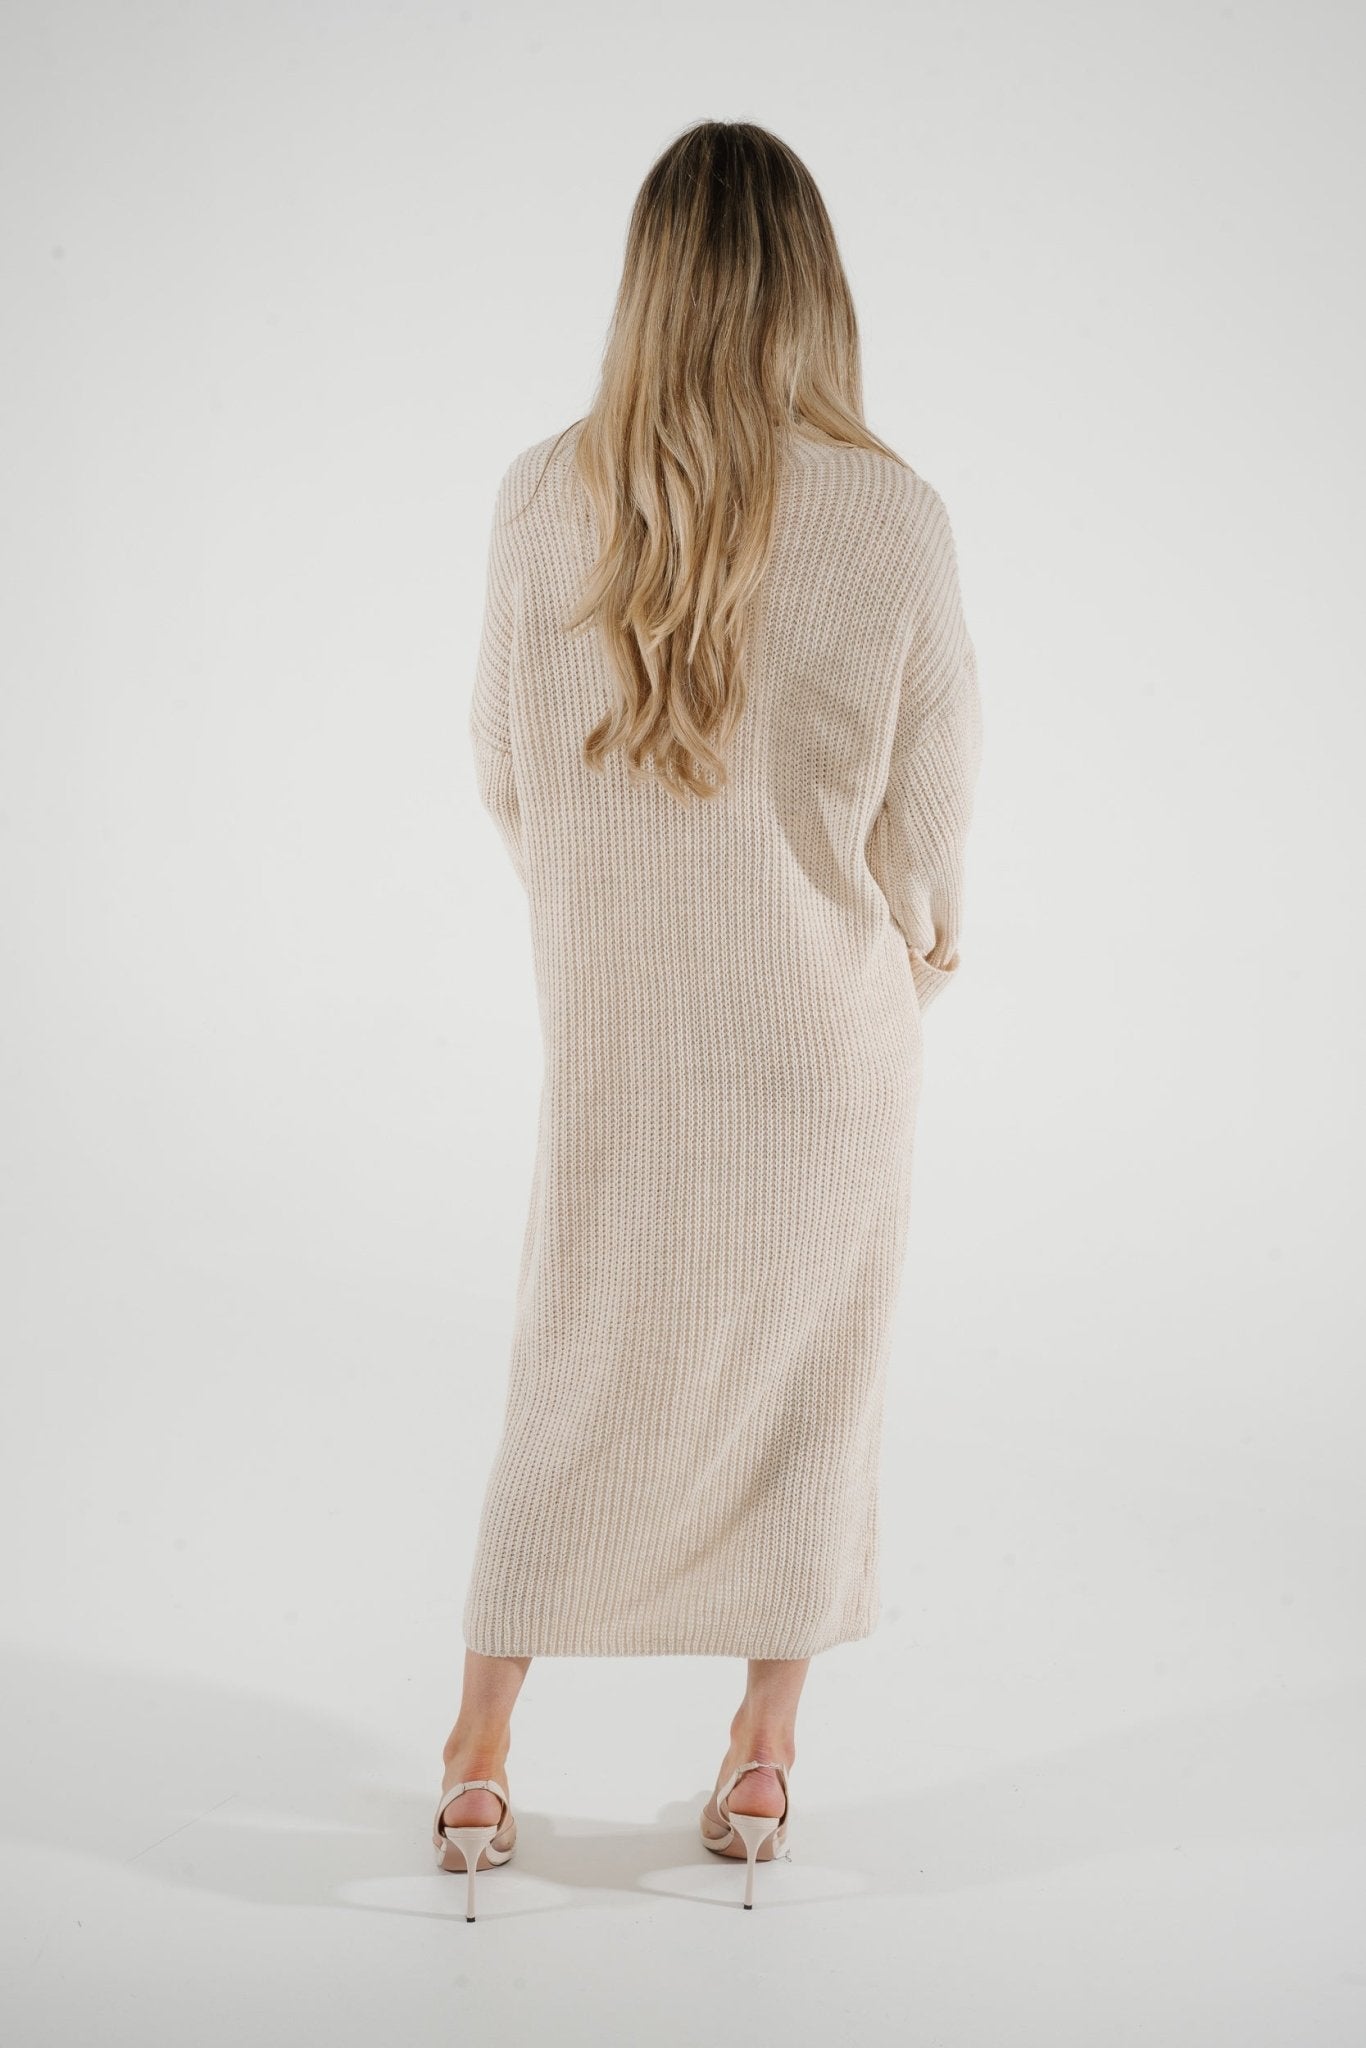 Danni Chunky Knit Dress In Neutral - The Walk in Wardrobe